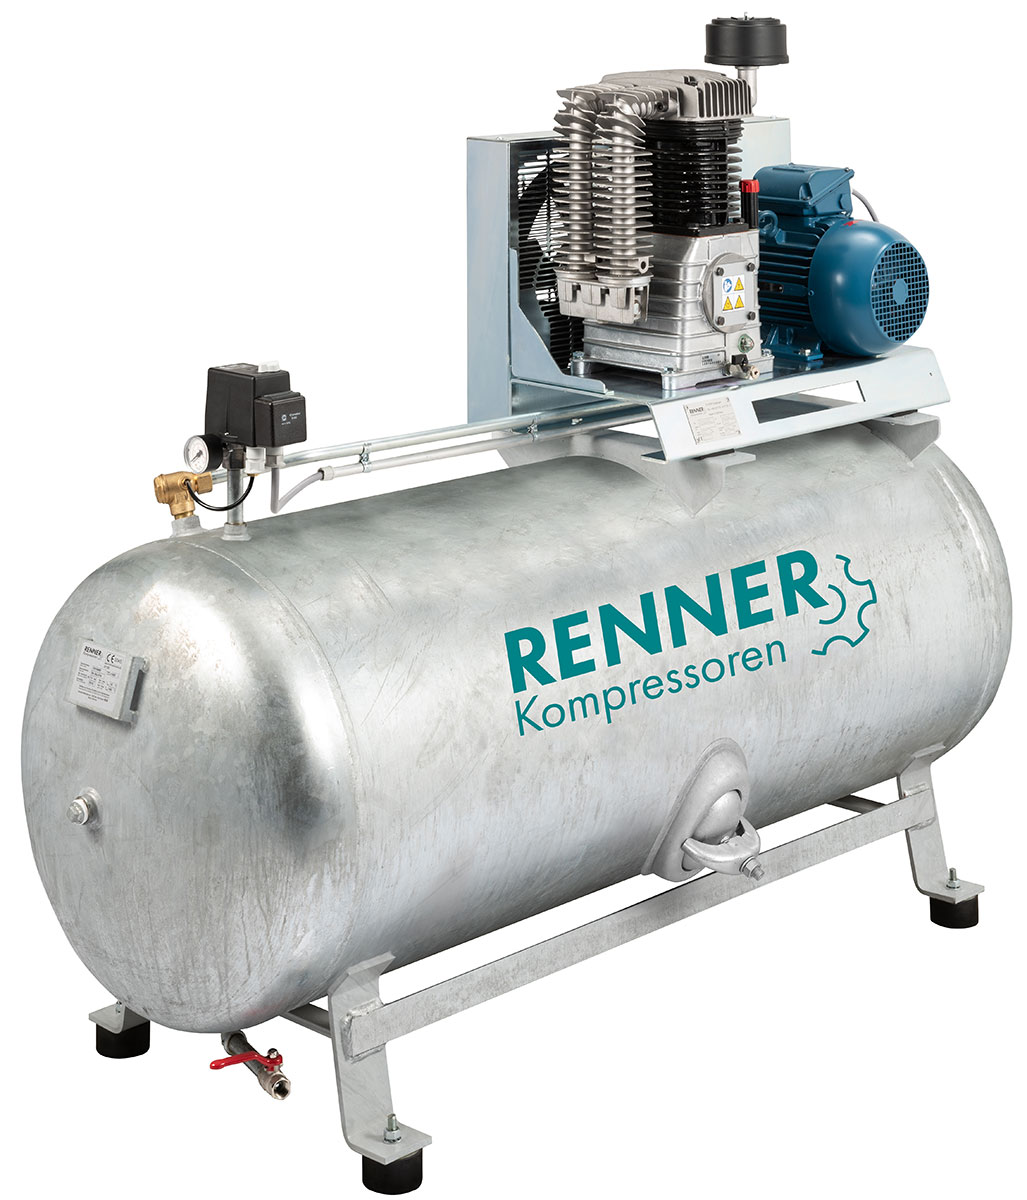 Renner RIKO 700/500 - 900/500 stationärer Industrie-Kolbenkompressor 4,0-5,5 kW, 10-15 bar, 500 Liter verzinkt